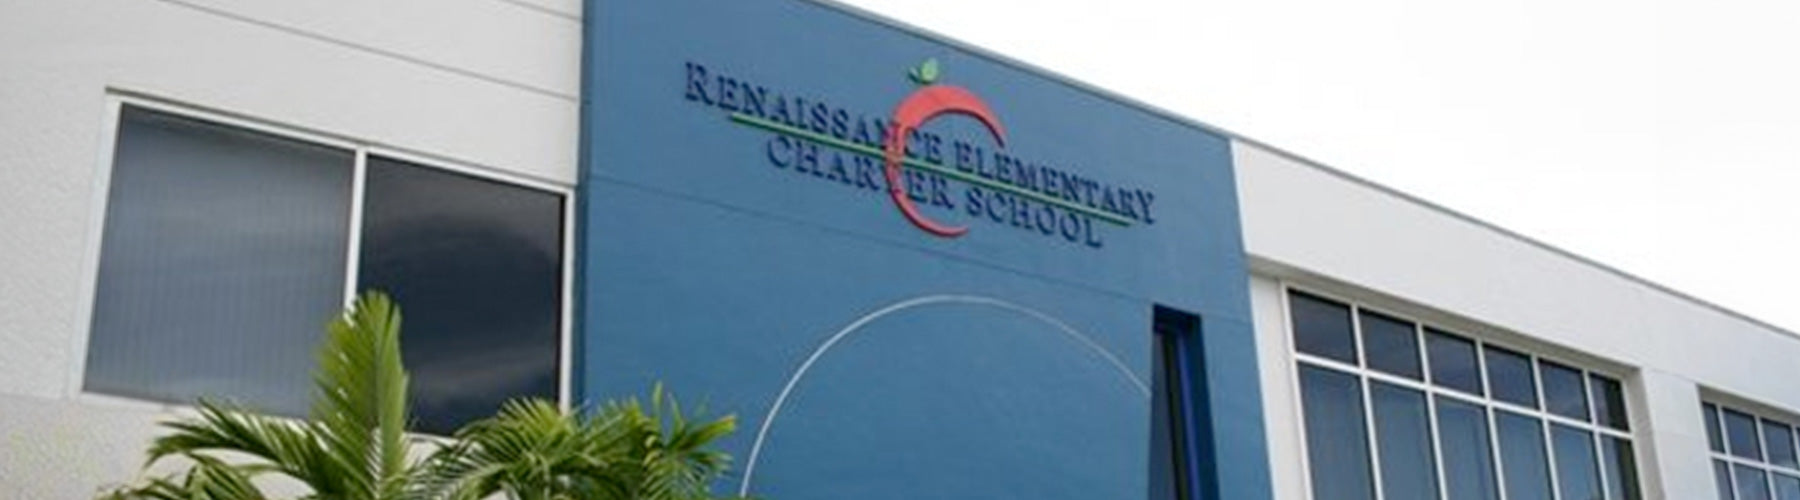 Renaissance Charter Elementary School At Doral (K-5)